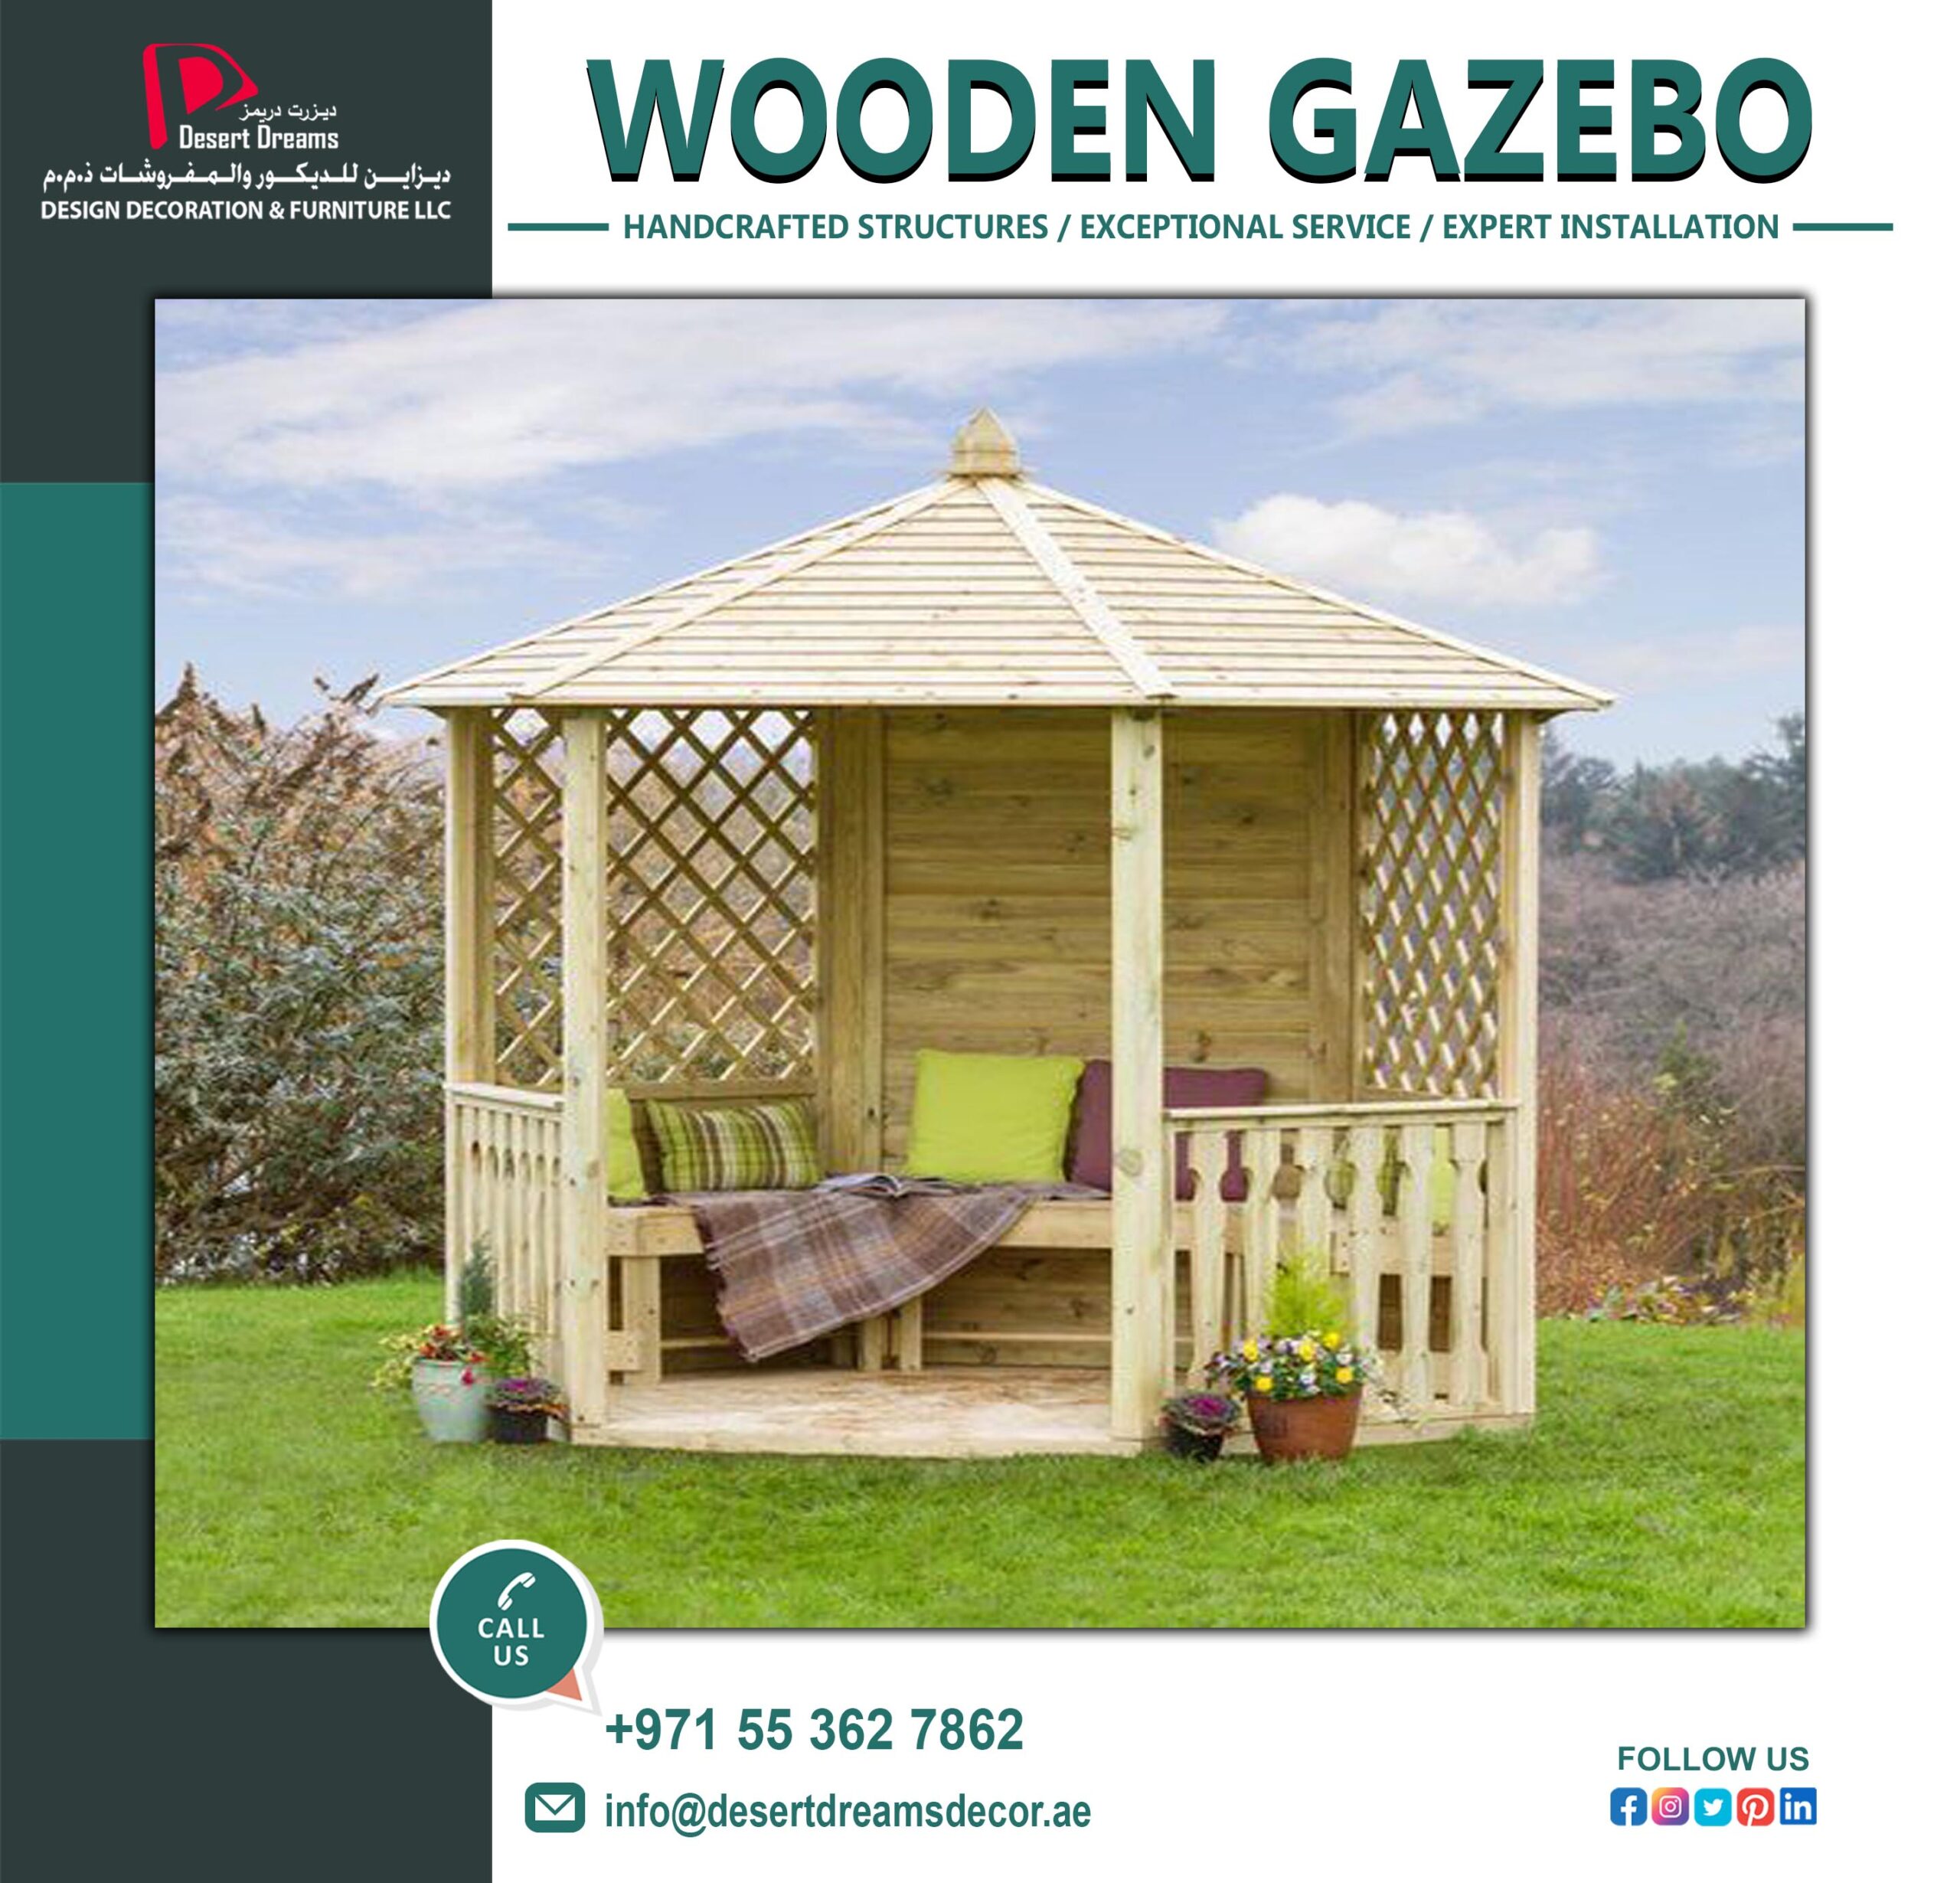 Supply and Install Wooden Gazebo in Dubai_Wooden Gazebo Abu Dhabi and Al Ain (5).jpg